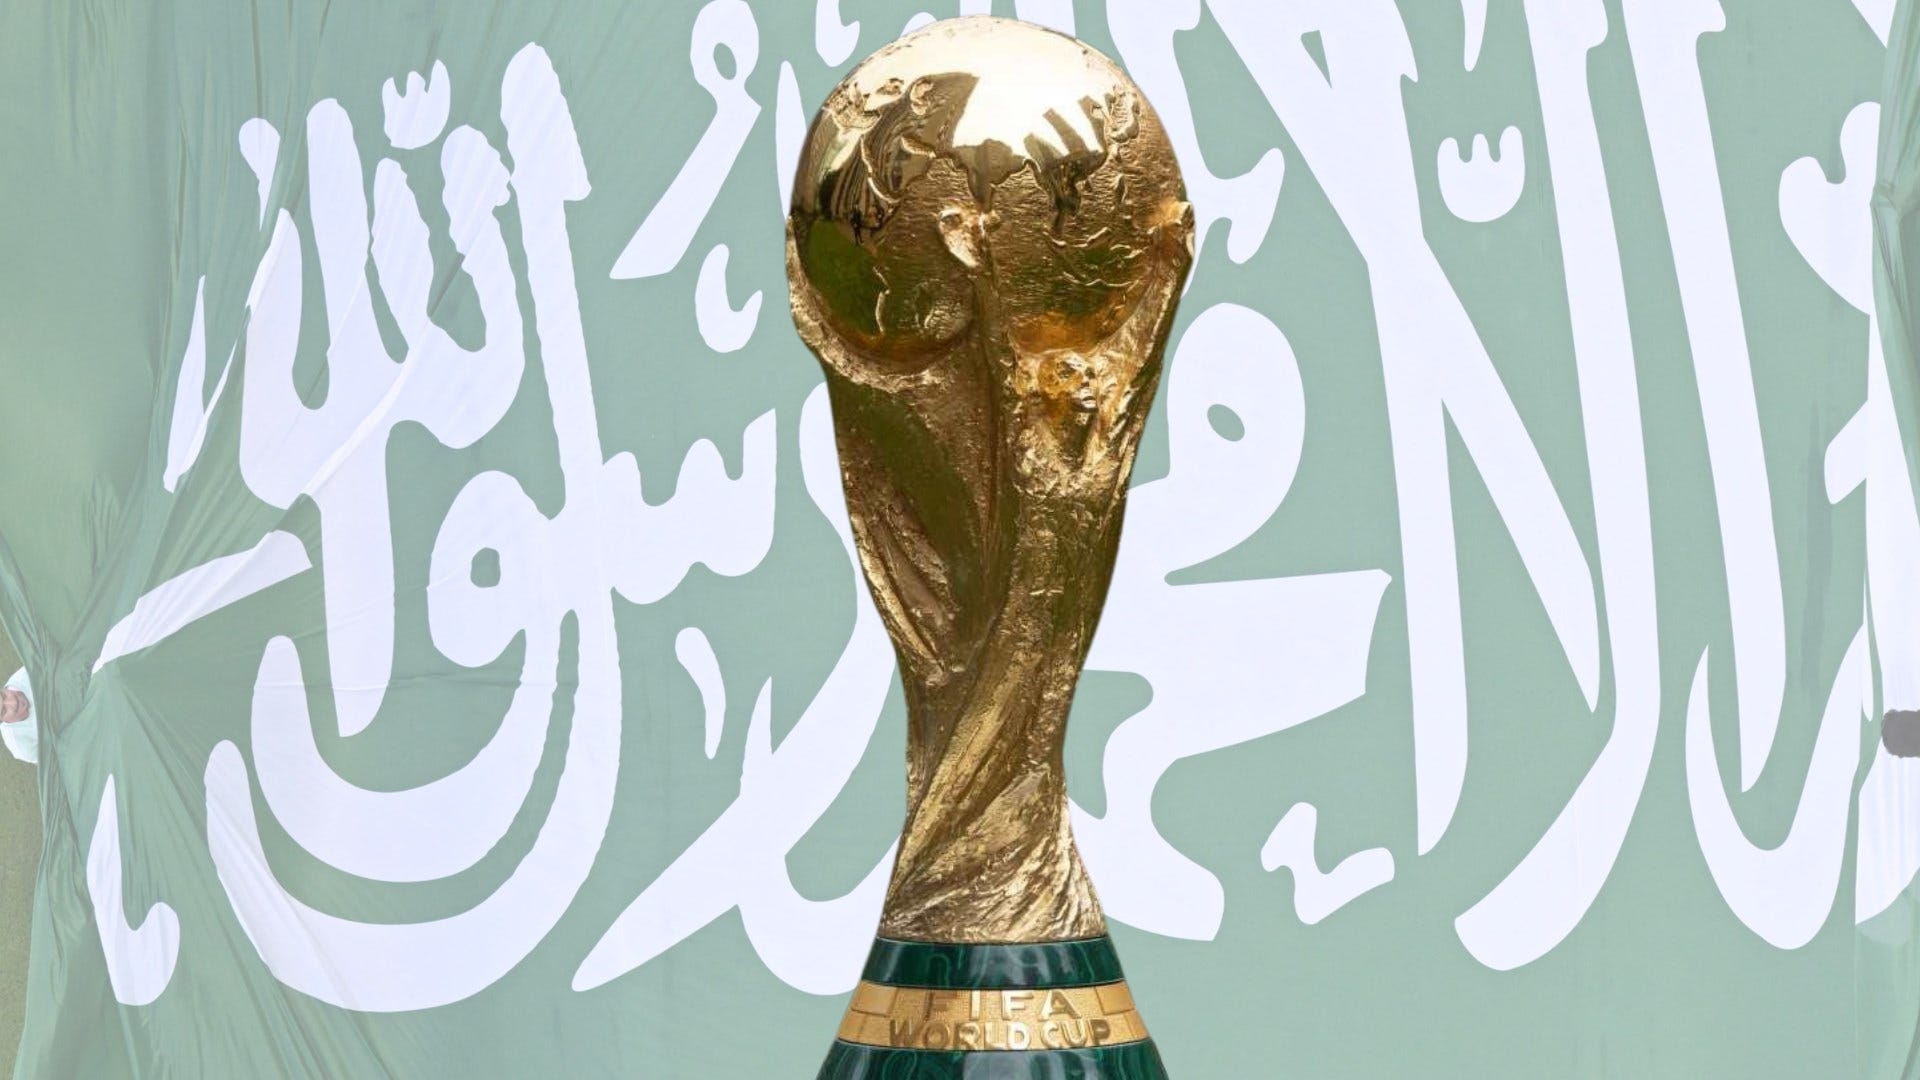 Saudi World Cup 2034